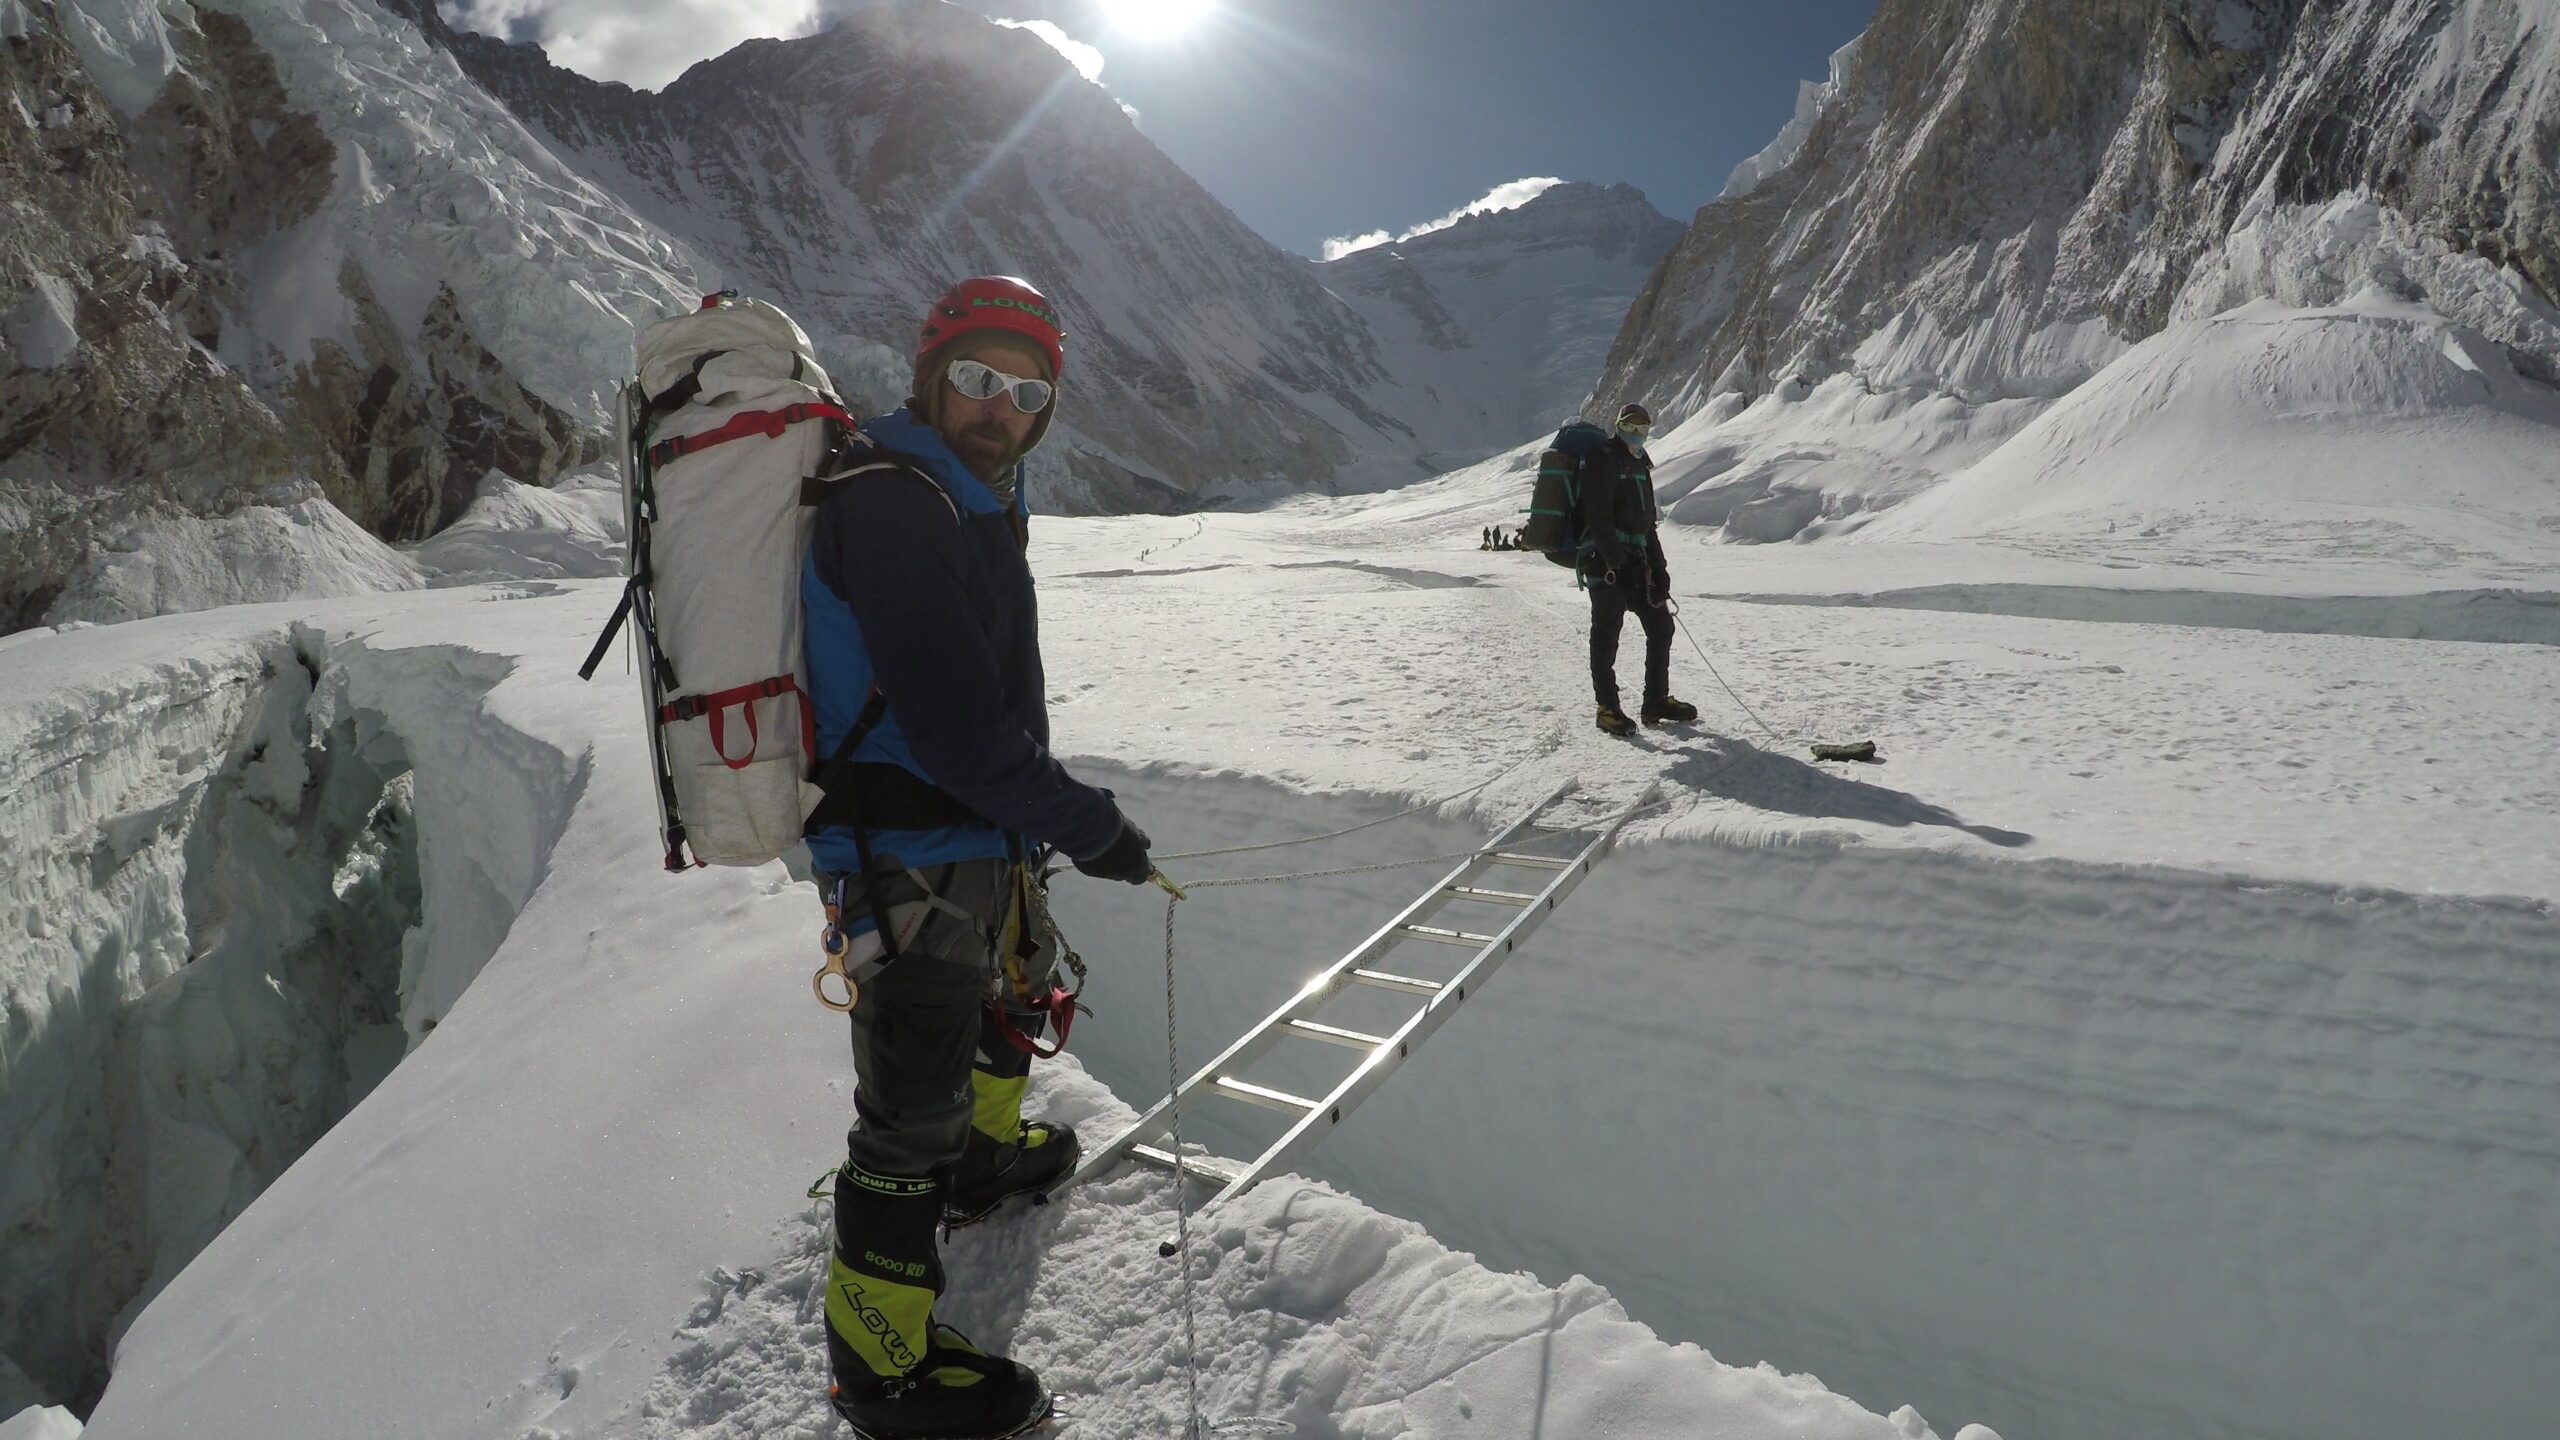 Jim Davidson on Mt Everest (courtesy of speakingofadventure.com)